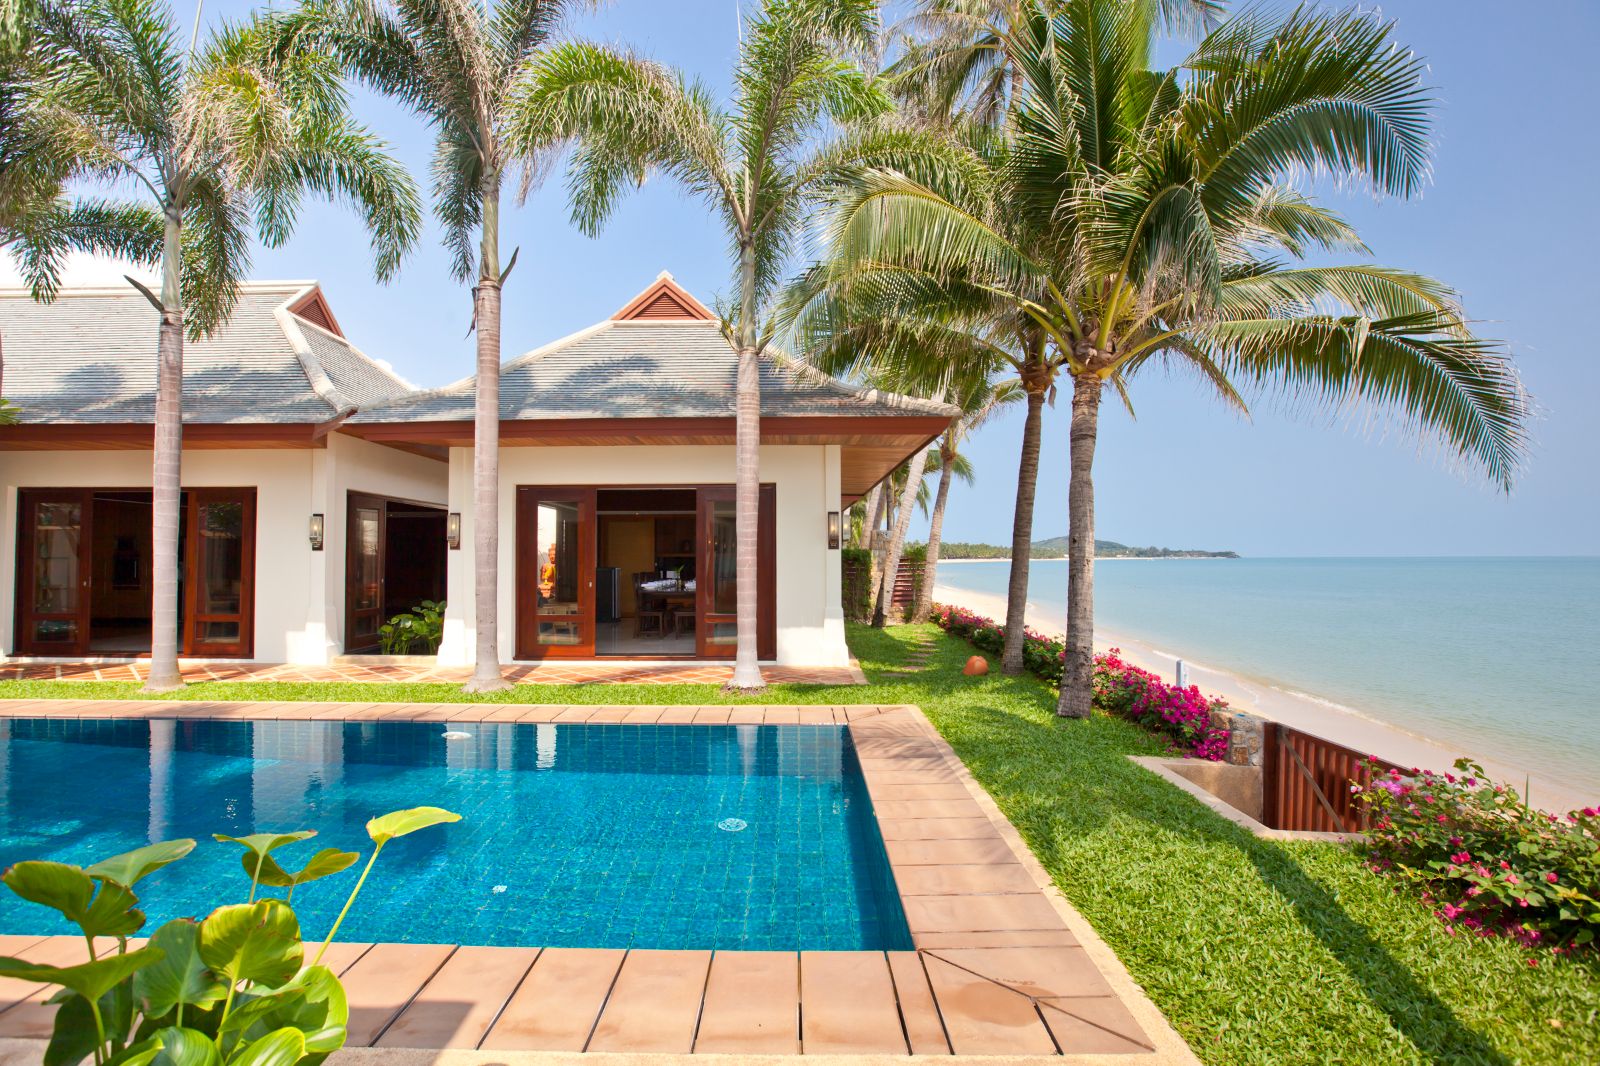 Swimming pool overlooking the ocean at Villa Gardenia on Koh Samui in Thailand